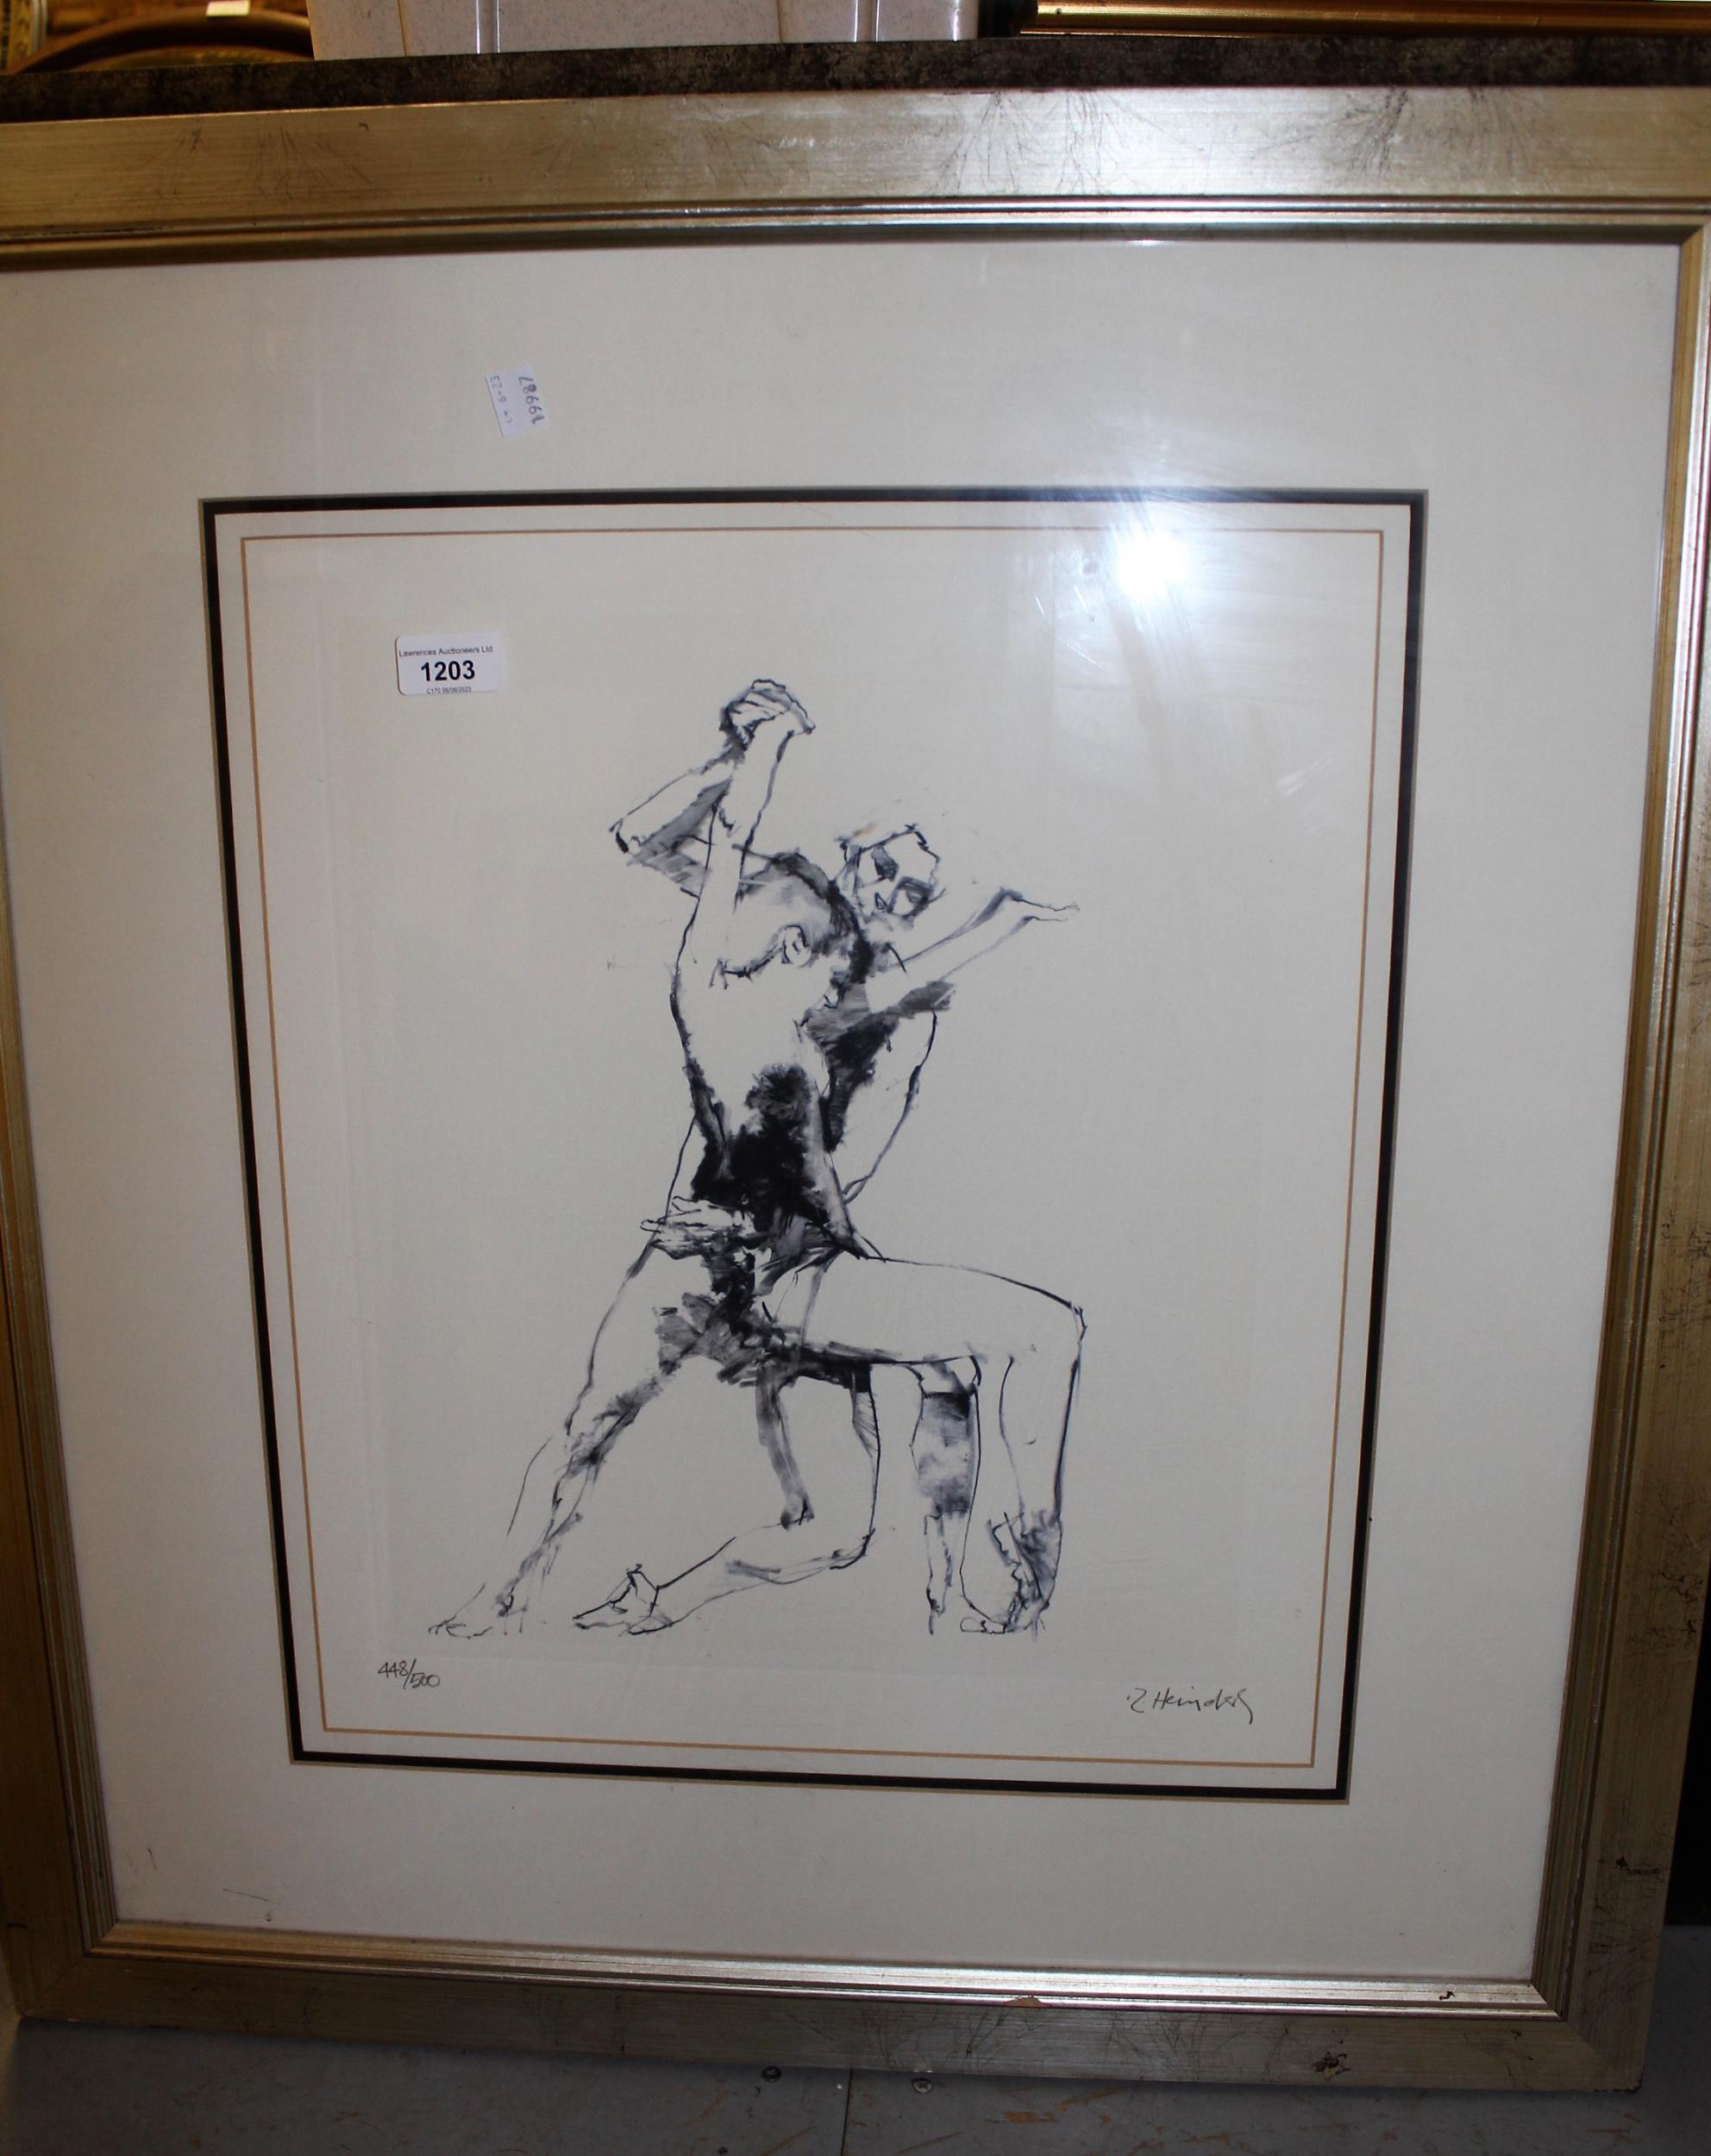 Z. Heindel, Limited Edition coloured print No.448 of 500, study of dancers, framed, 47cms x 40cms,